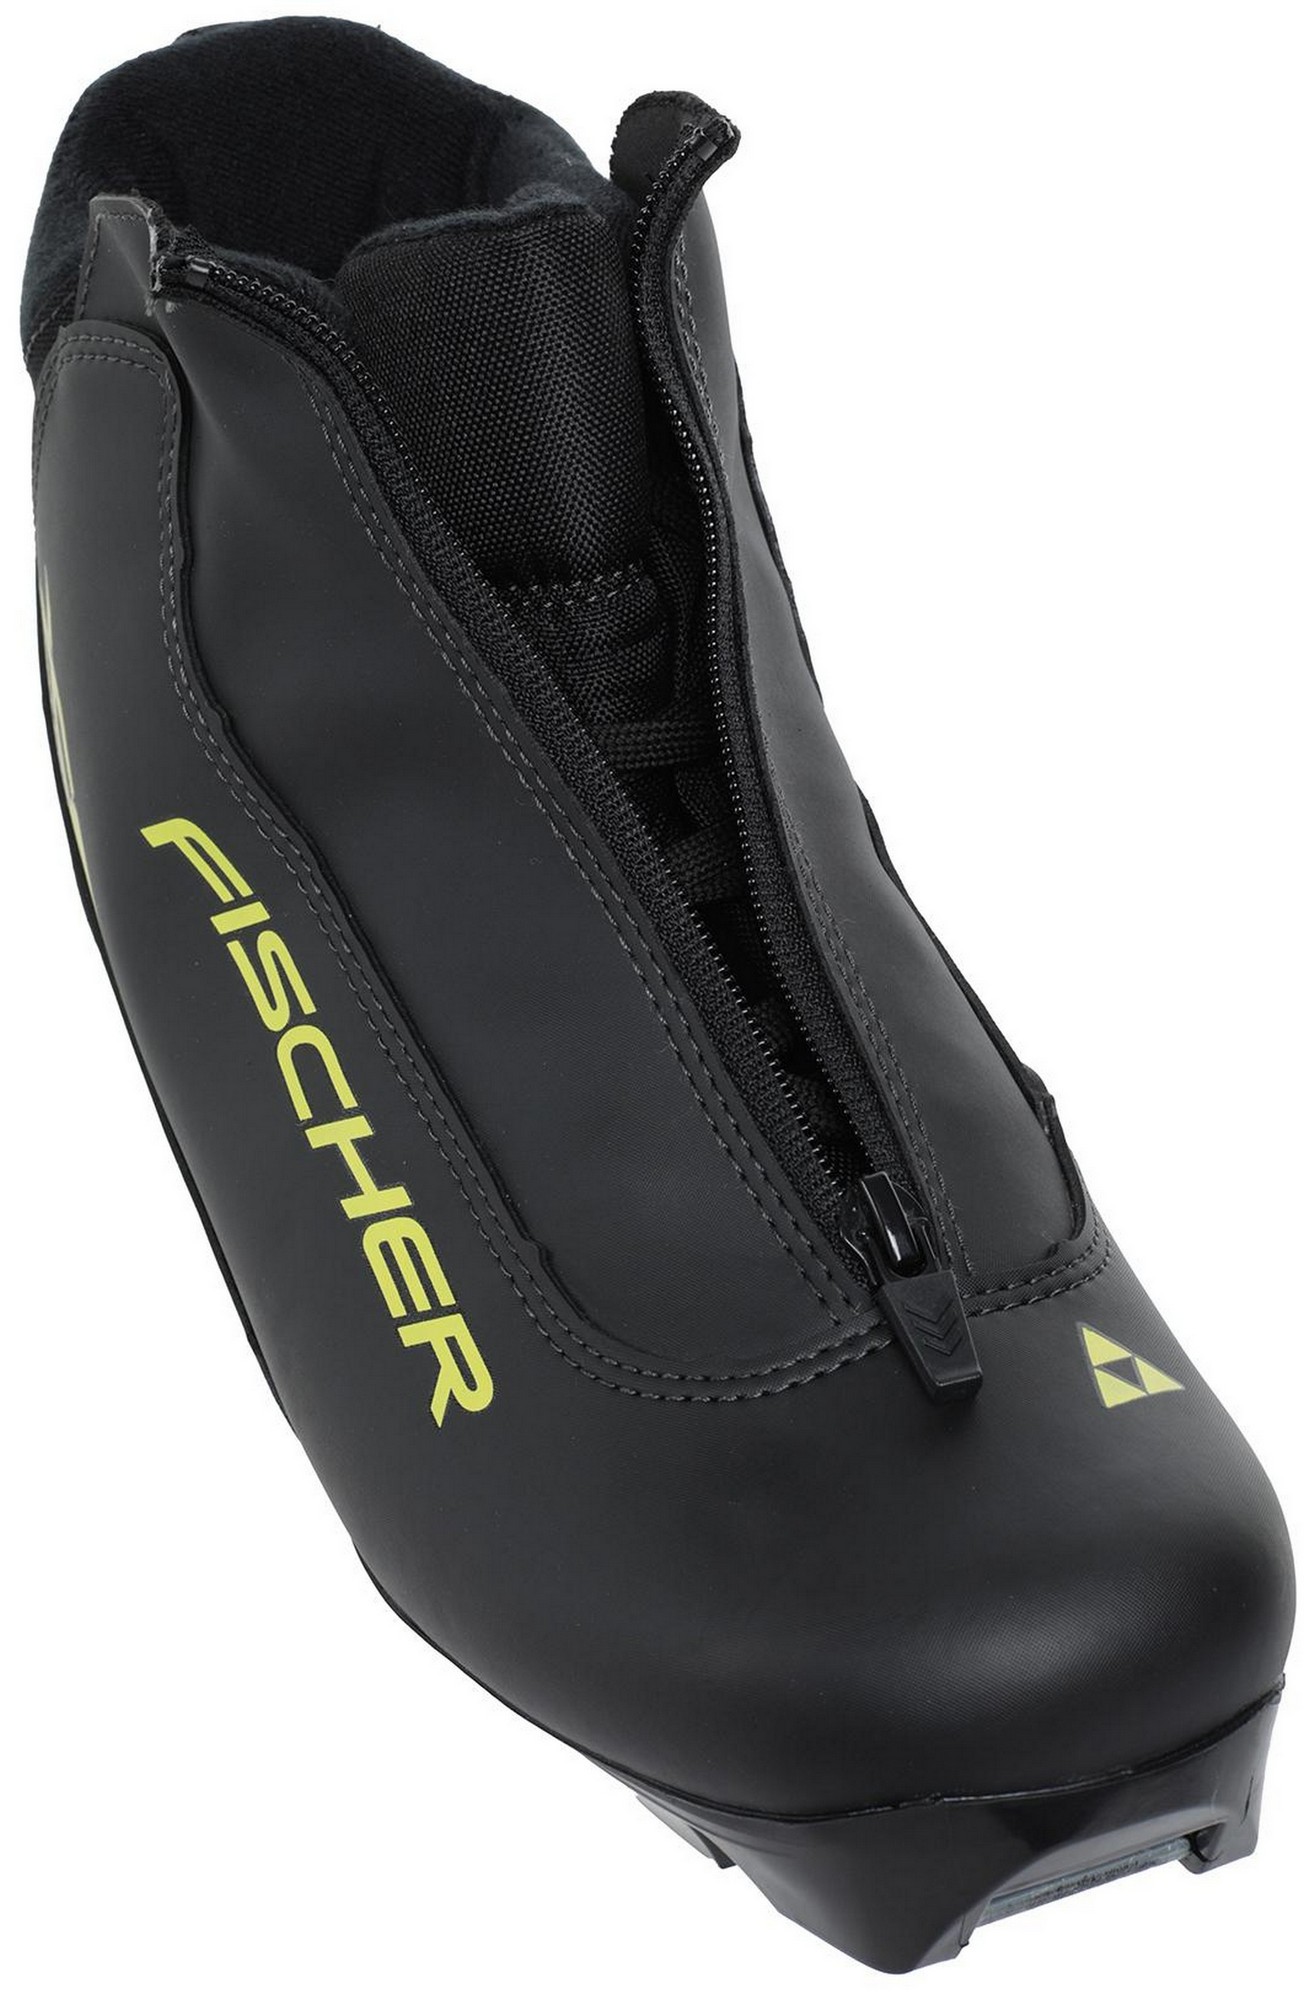 Лыжные ботинки Fischer NNN XC Sport Pro S86122 черный\желтый 1315_2000